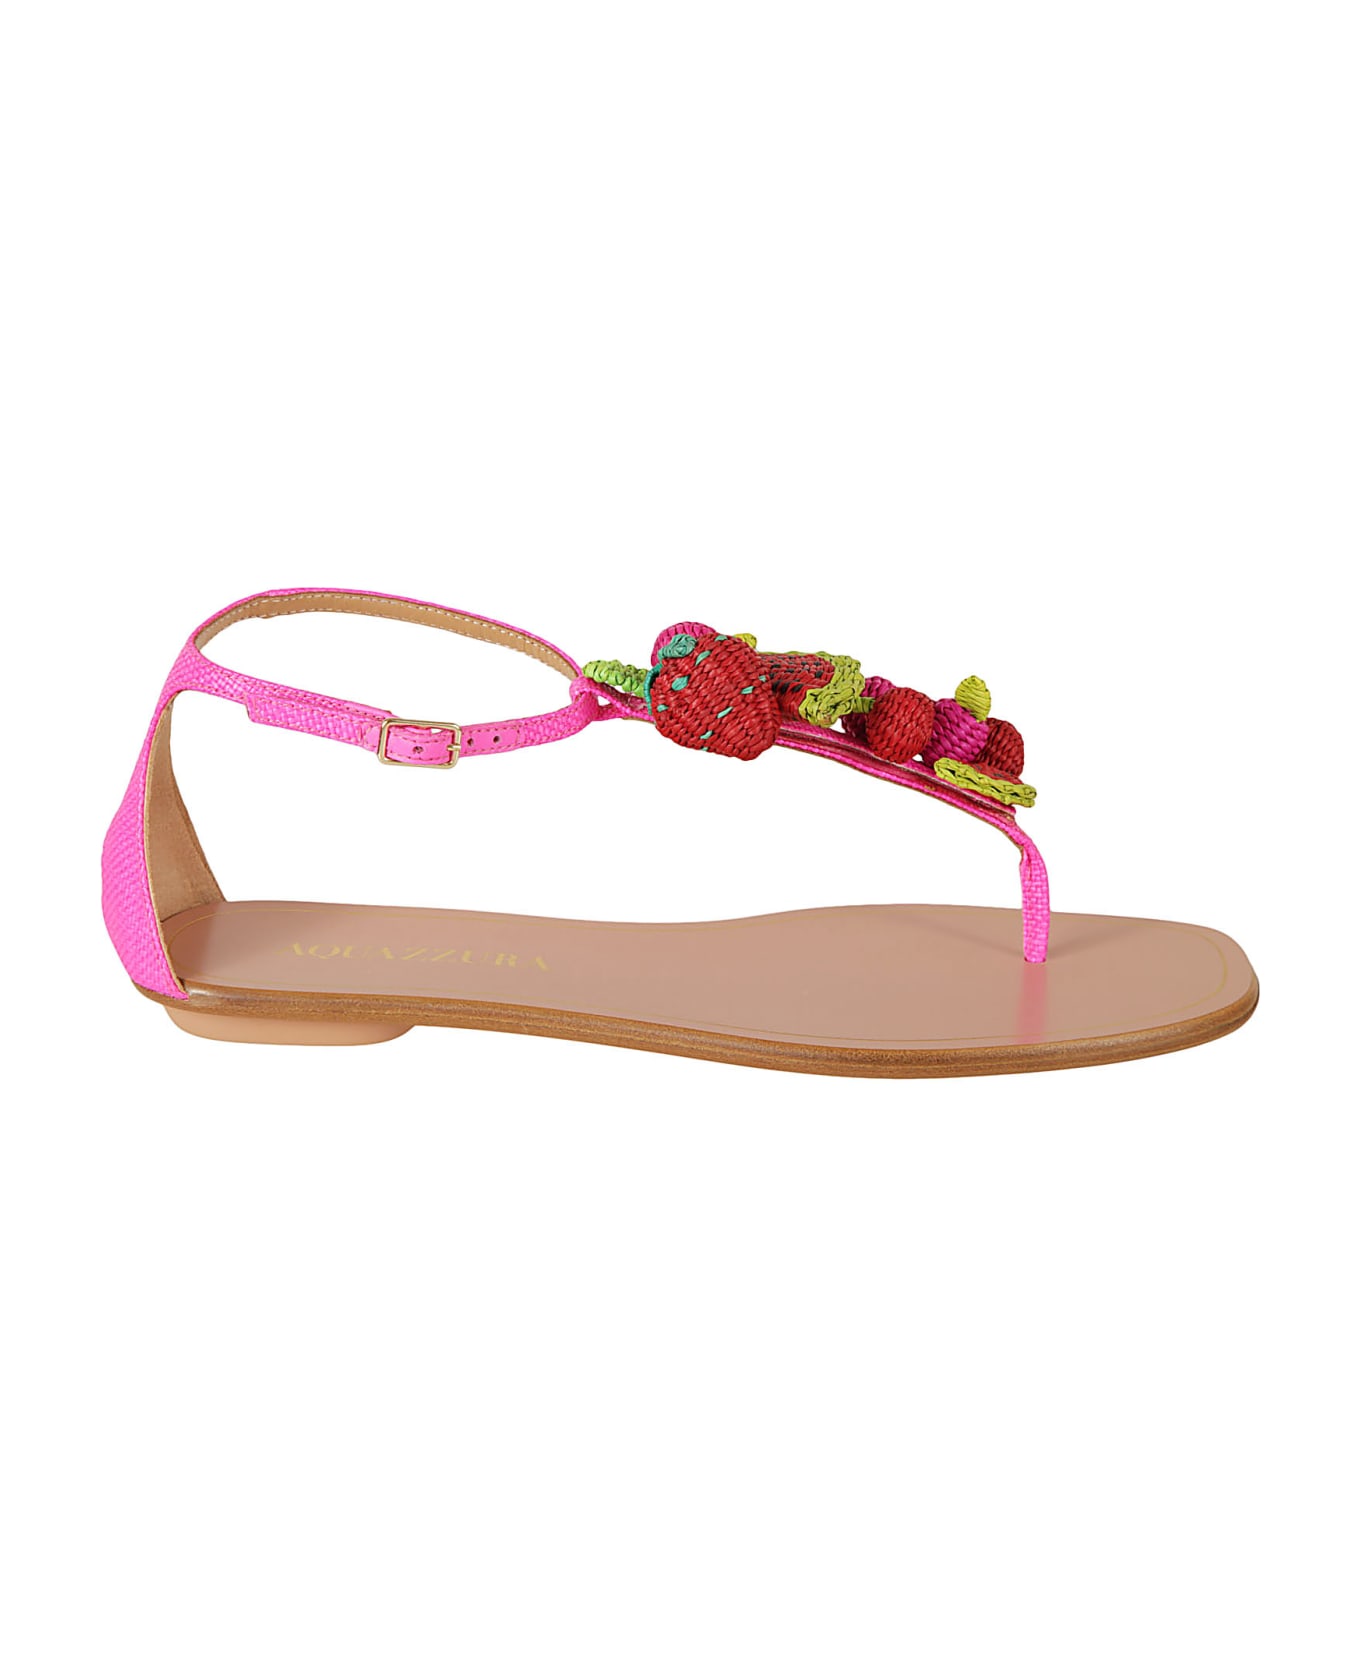 Aquazzura Strawberry Punch Sandals - Ultra Pink